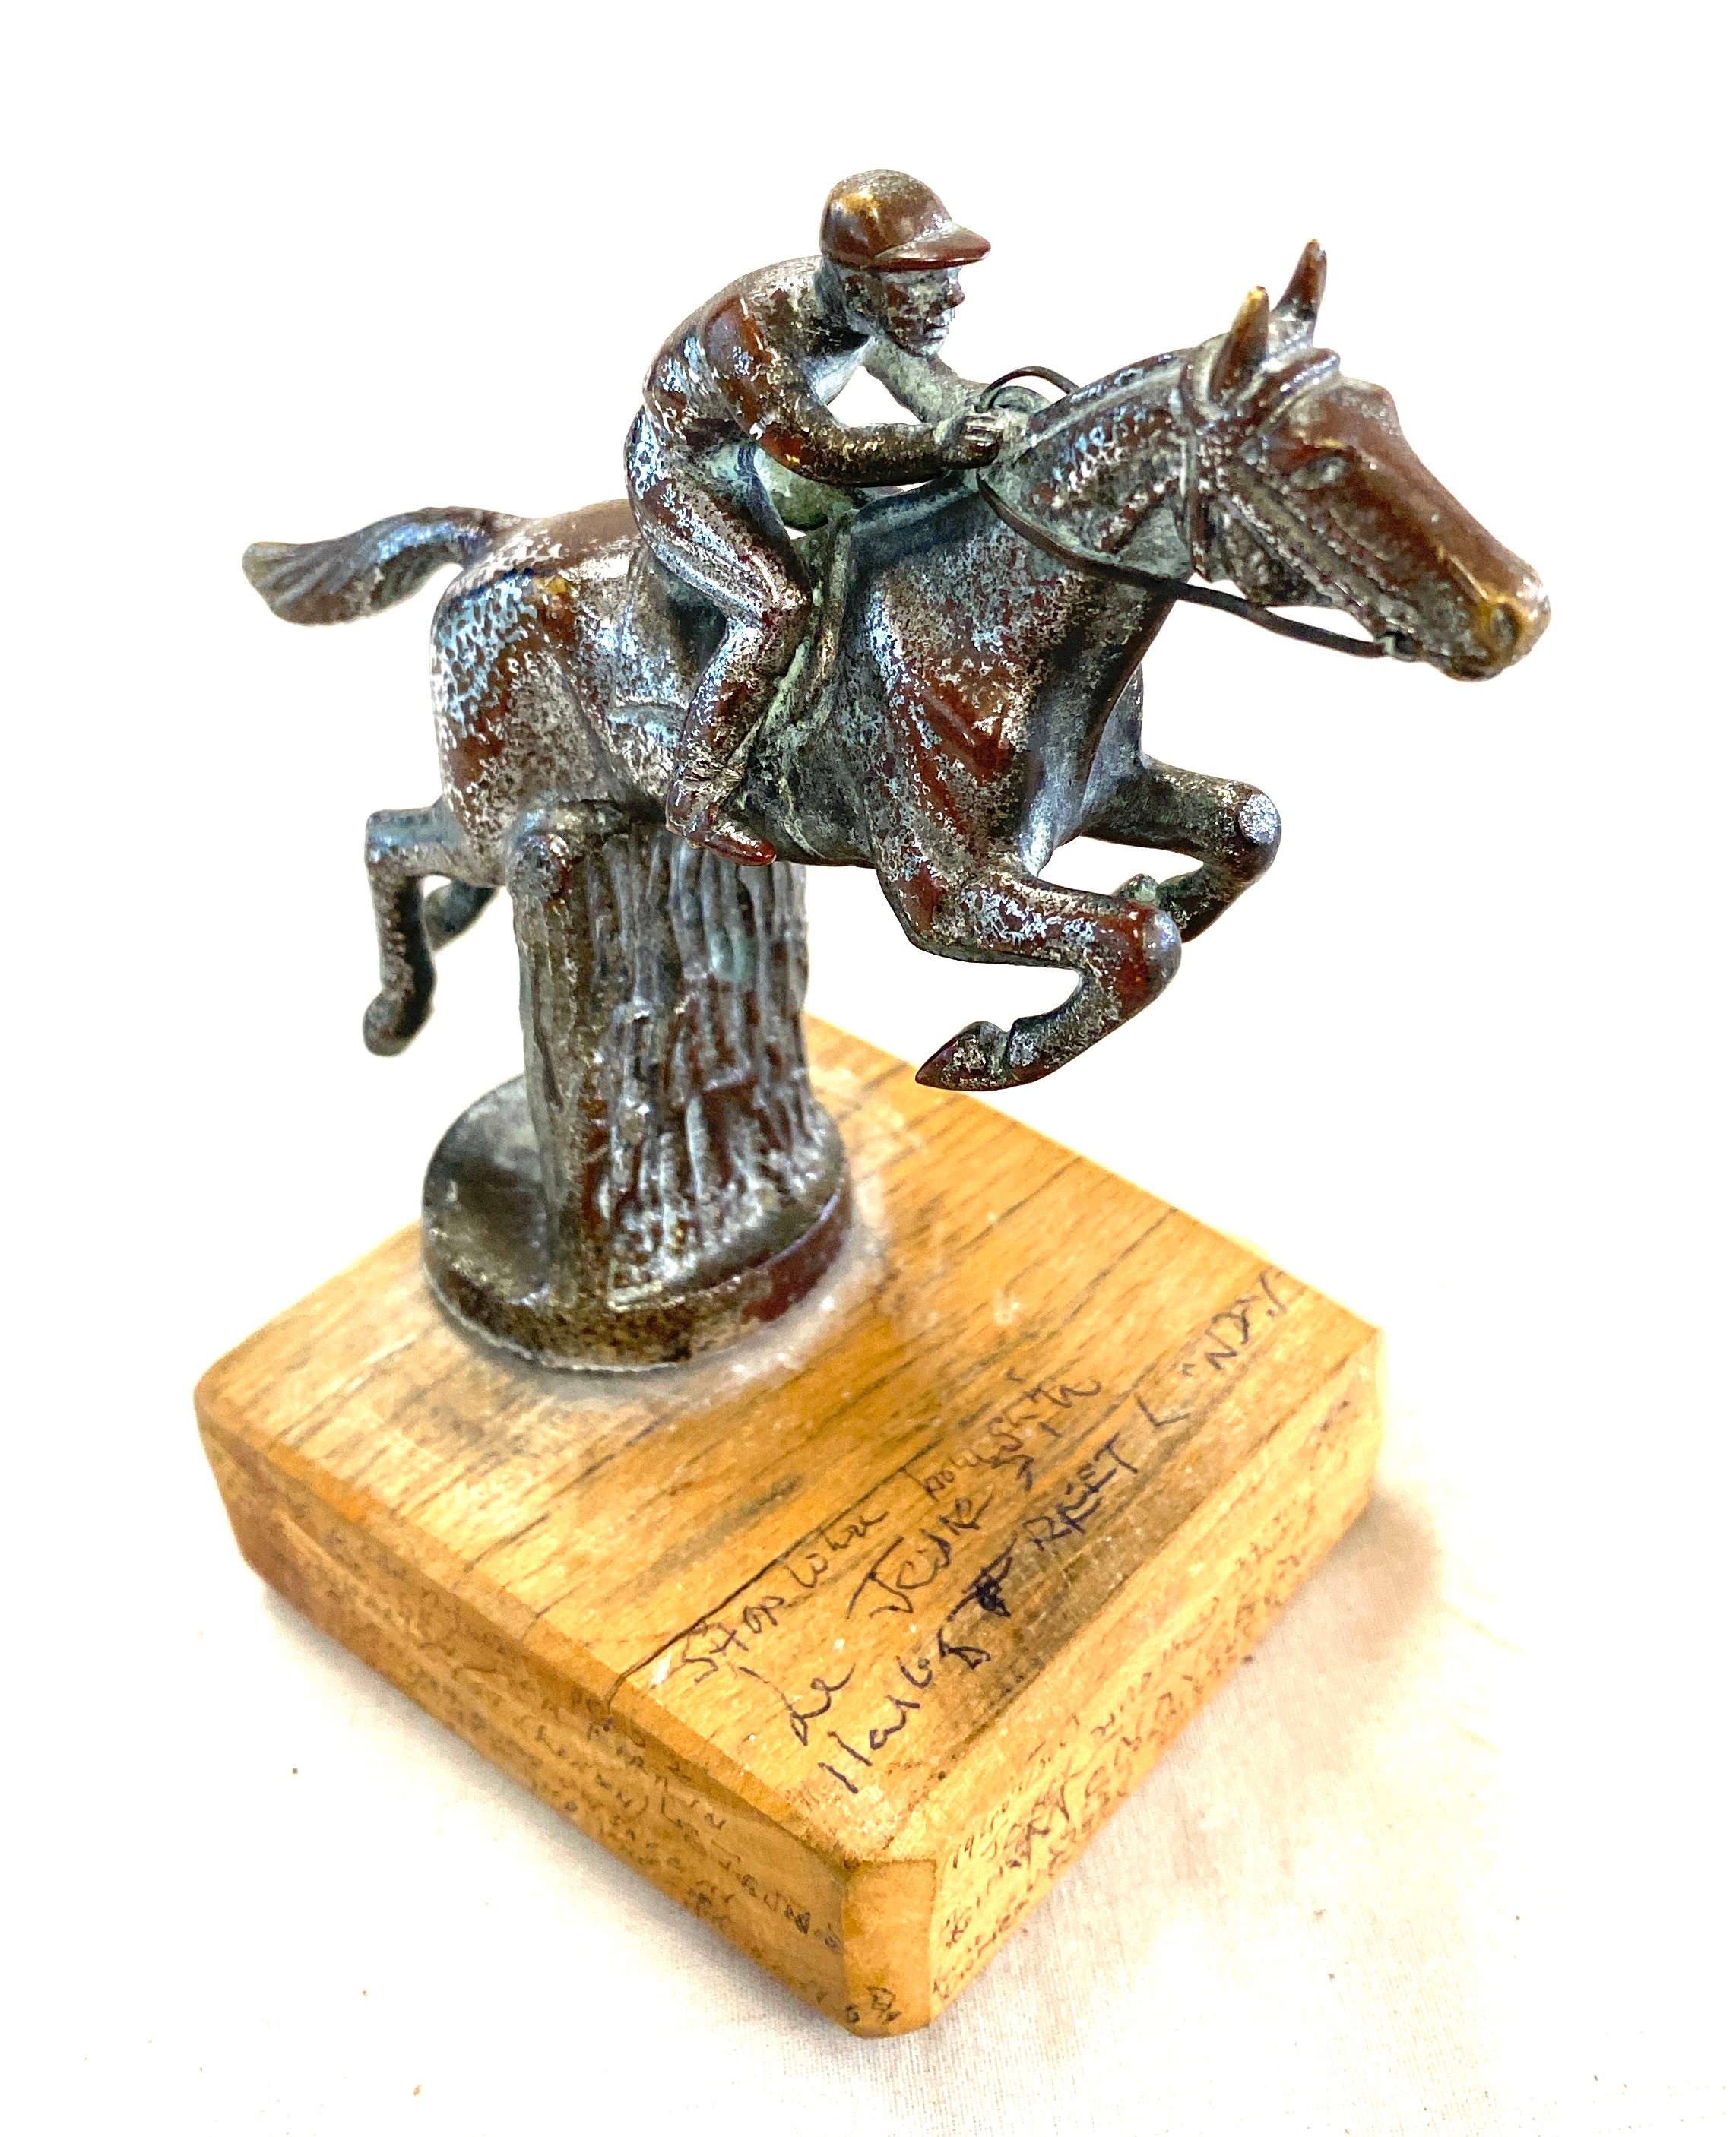 Scarce original 1920's chrome plated bronze car mascot of a race horse